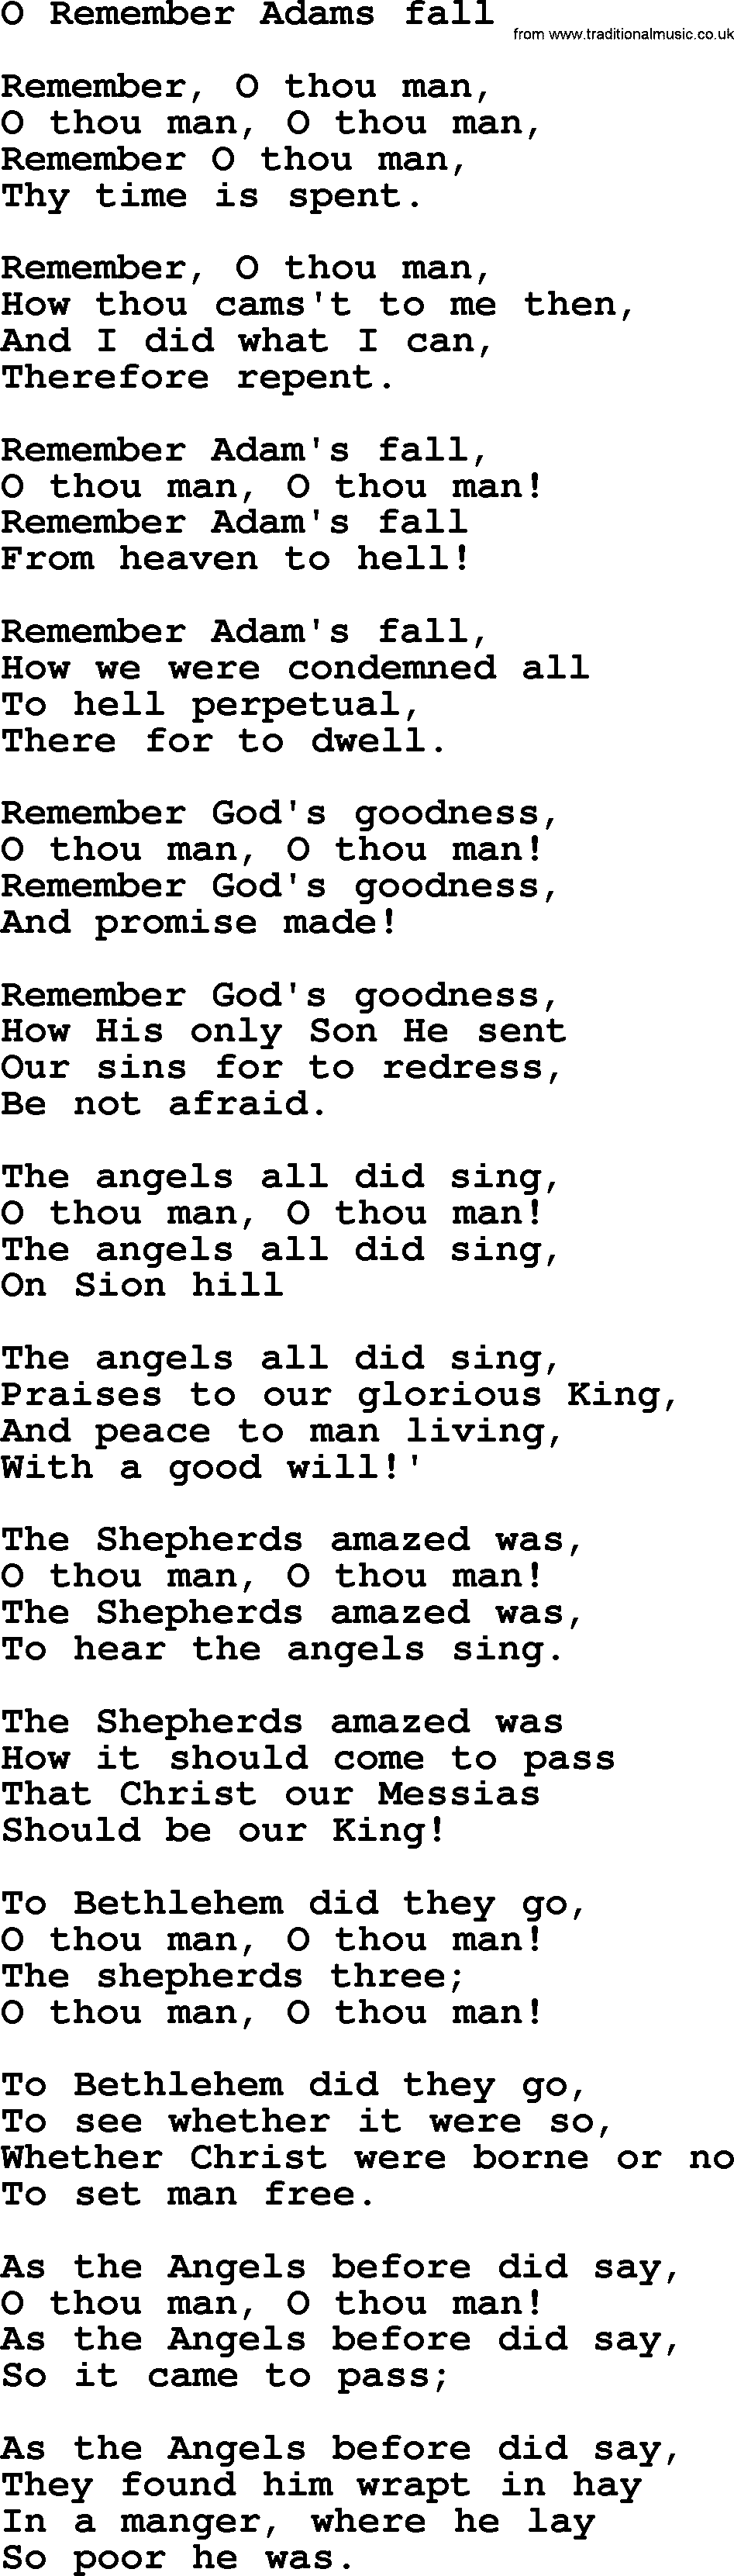 Christmas Hymns, Carols and Songs, title: O Remember Adams Fall, lyrics with PDF